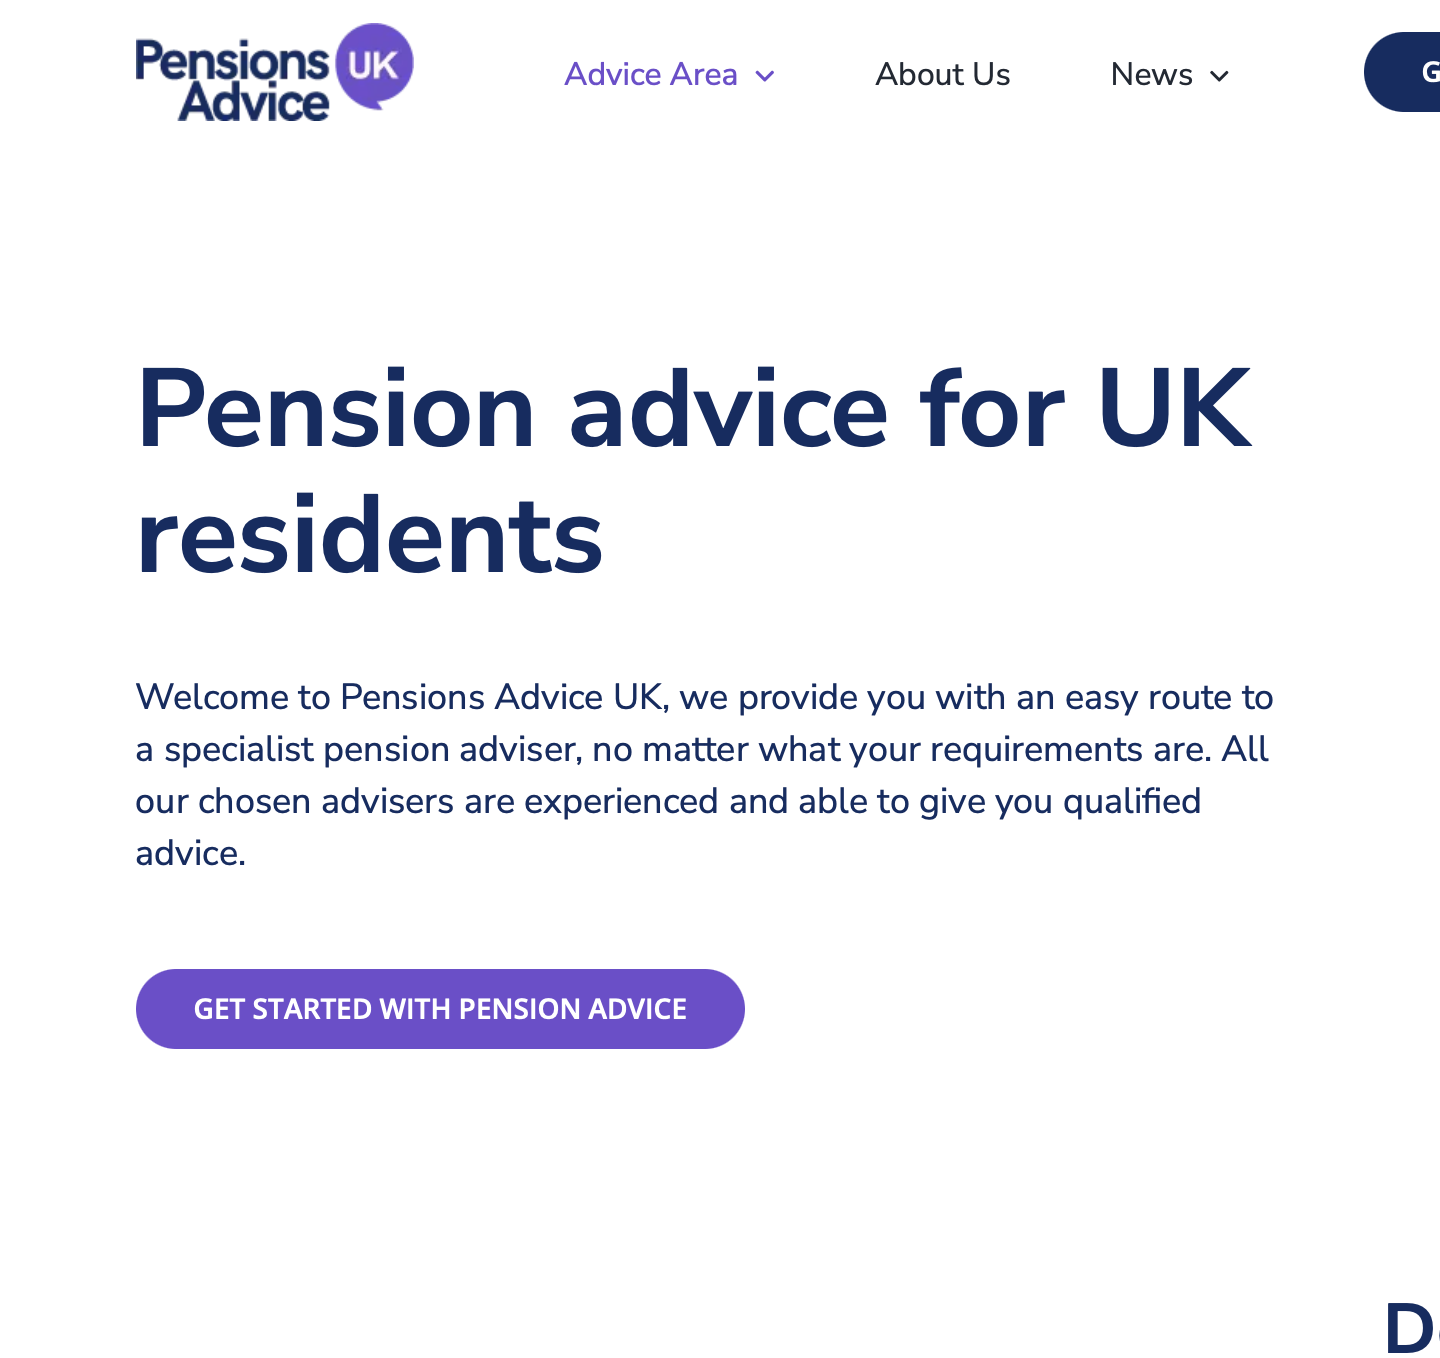 Pensions Advice Web Site Design and Development image